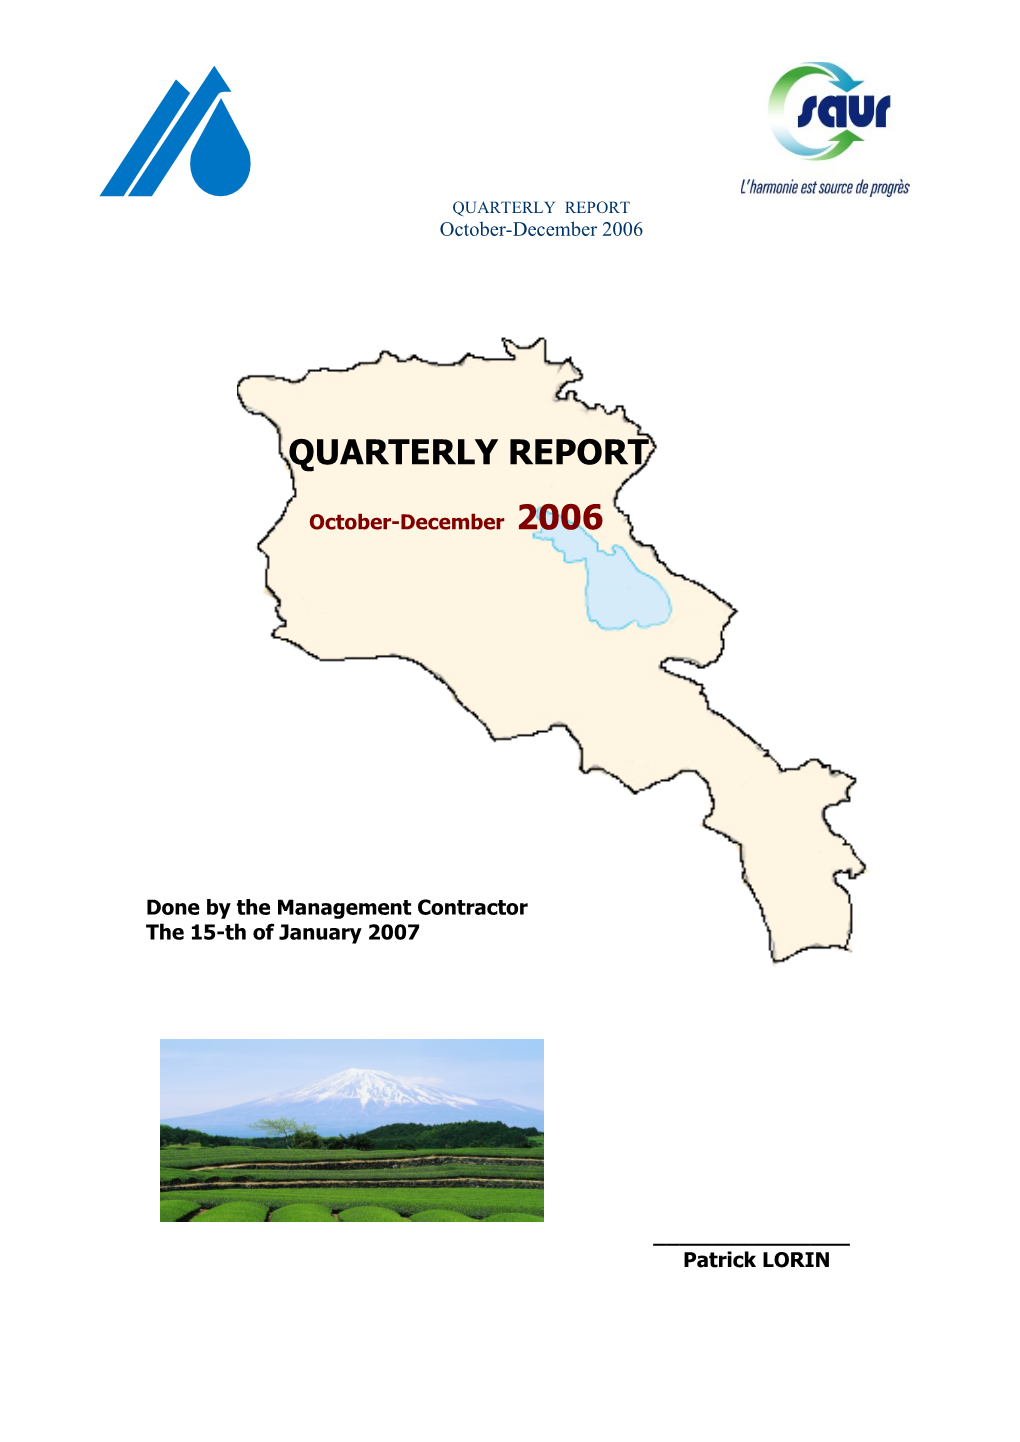 QUARTERLY REPORT October-December 2006